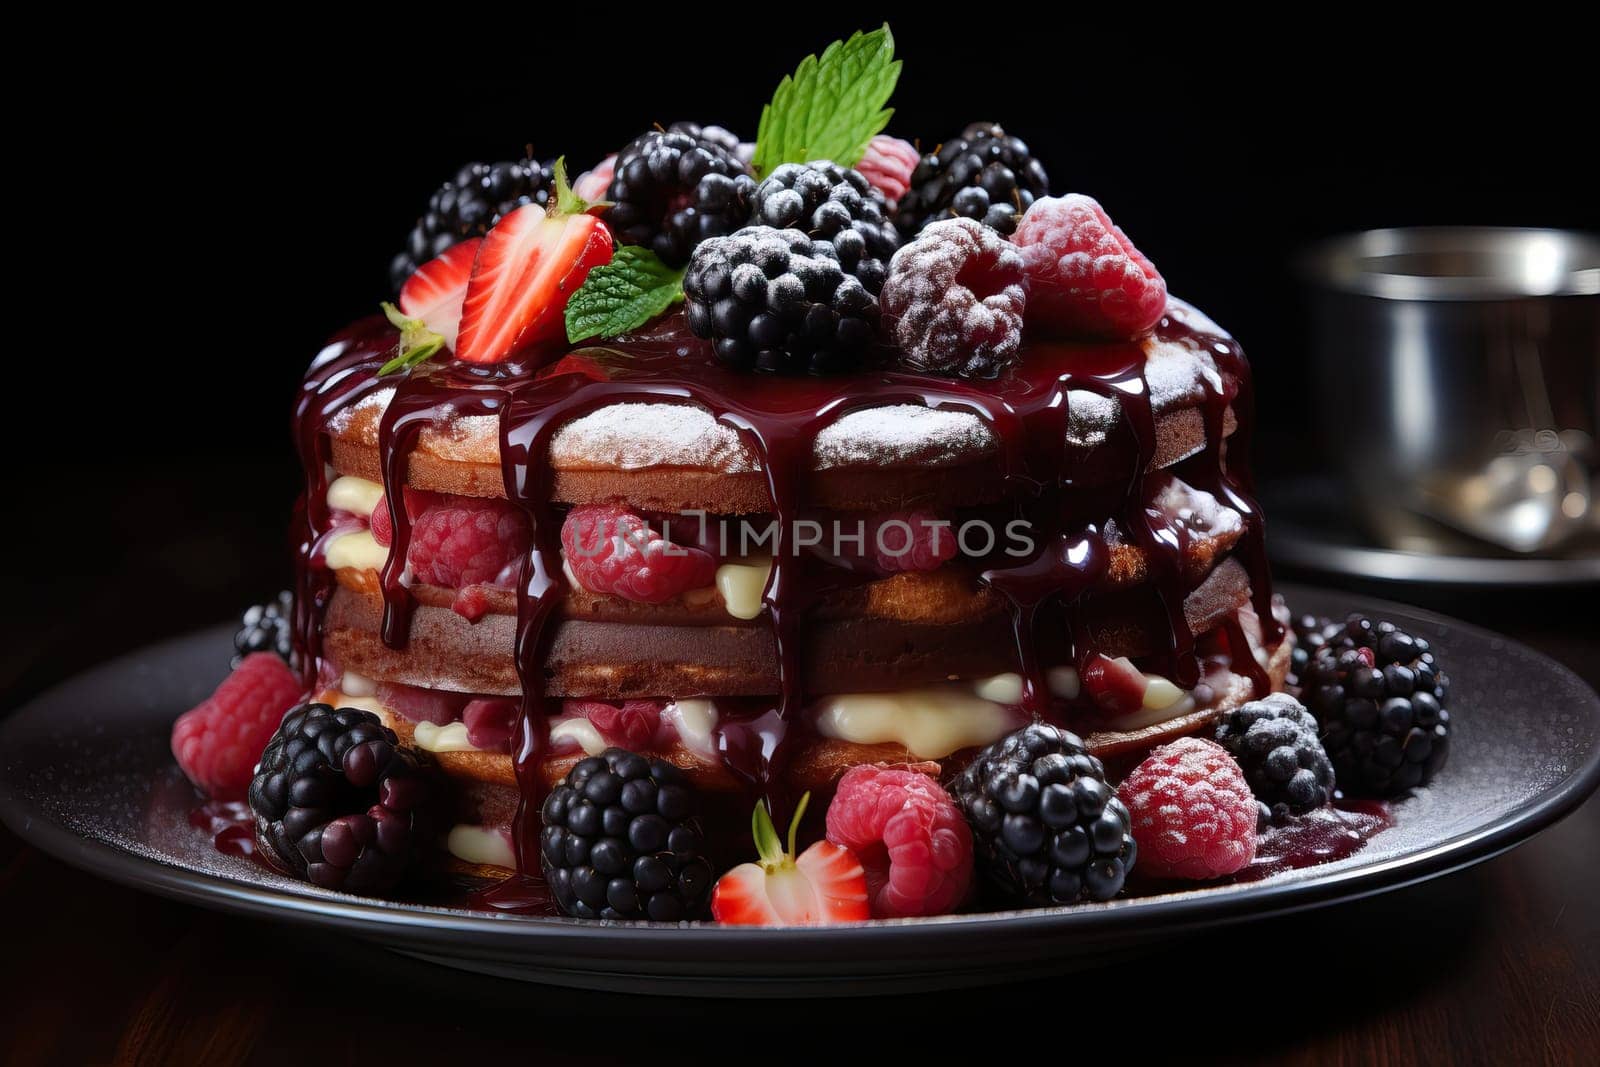 A piece of chocolate sponge cake with white cream and berries. by Niko_Cingaryuk